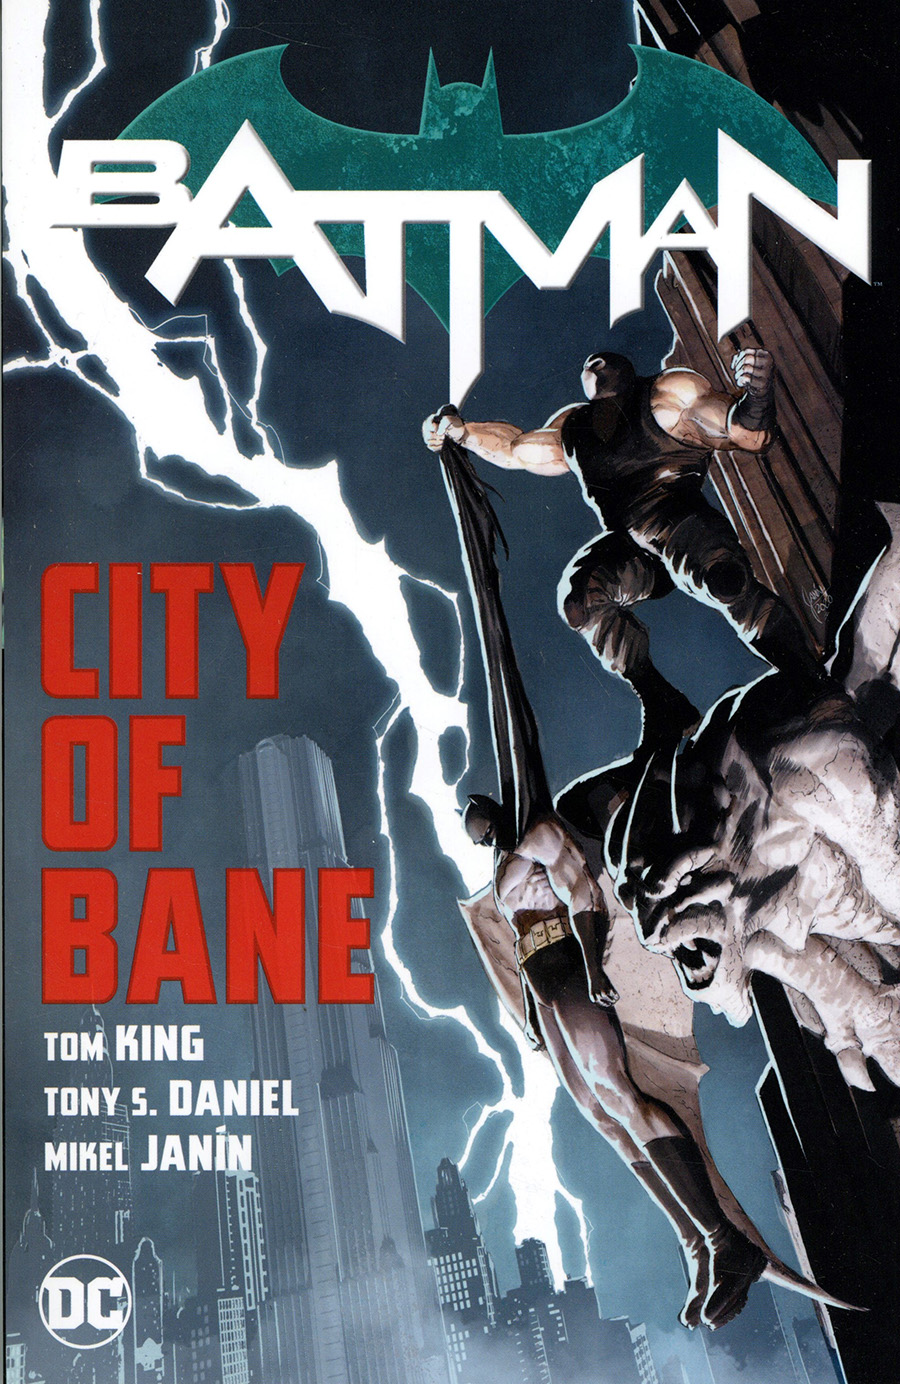 Batman City Of Bane Complete Collection TP USA.